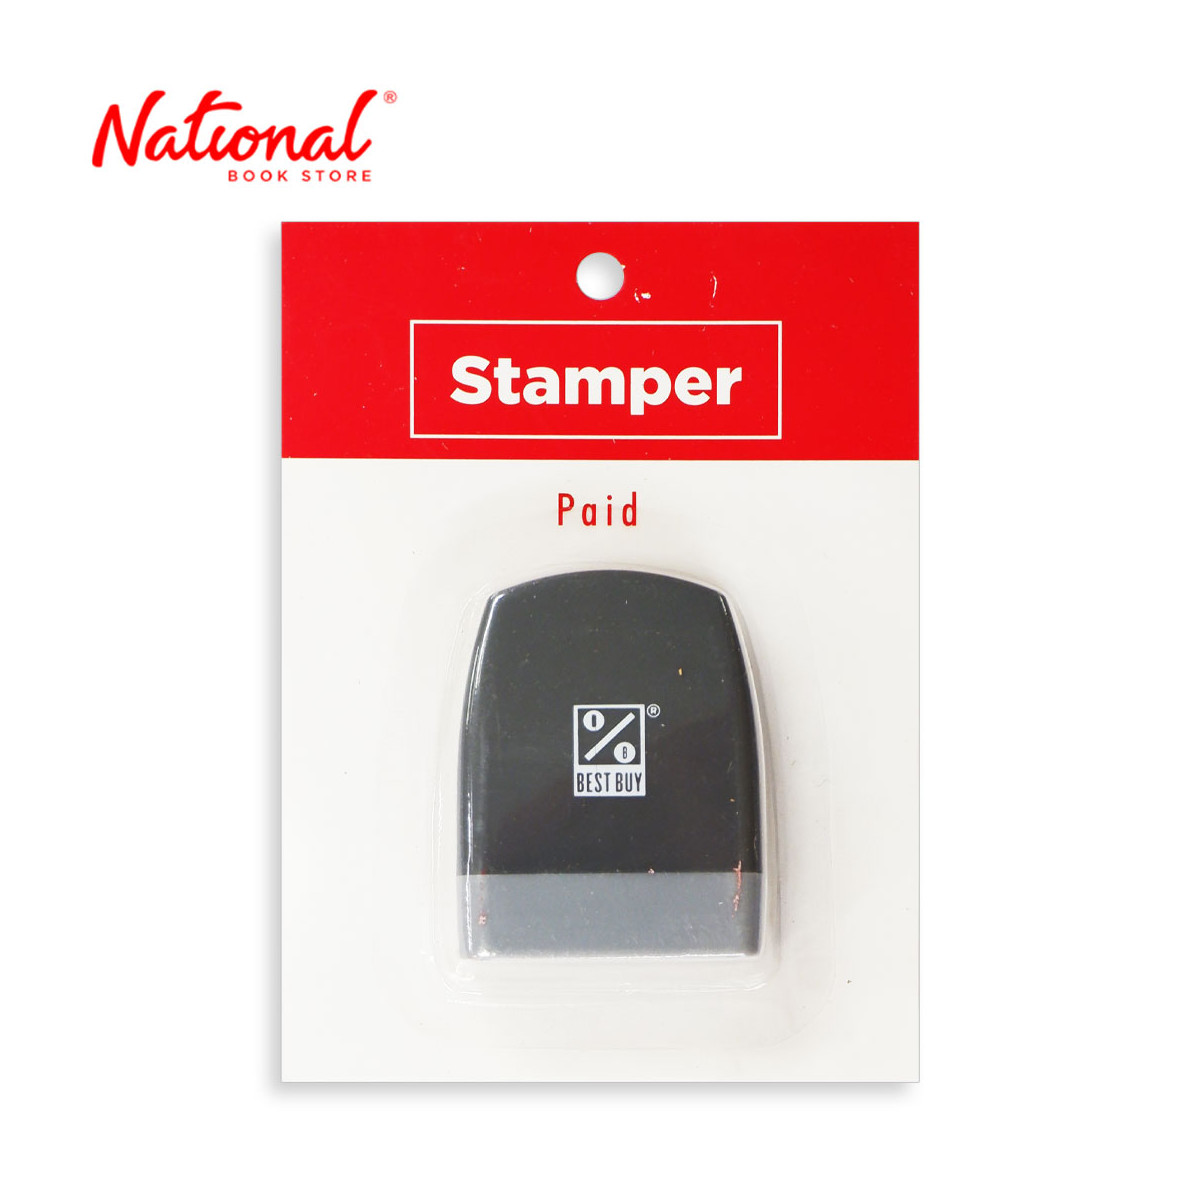 Best Buy Stamper Paid - Filing Supplies